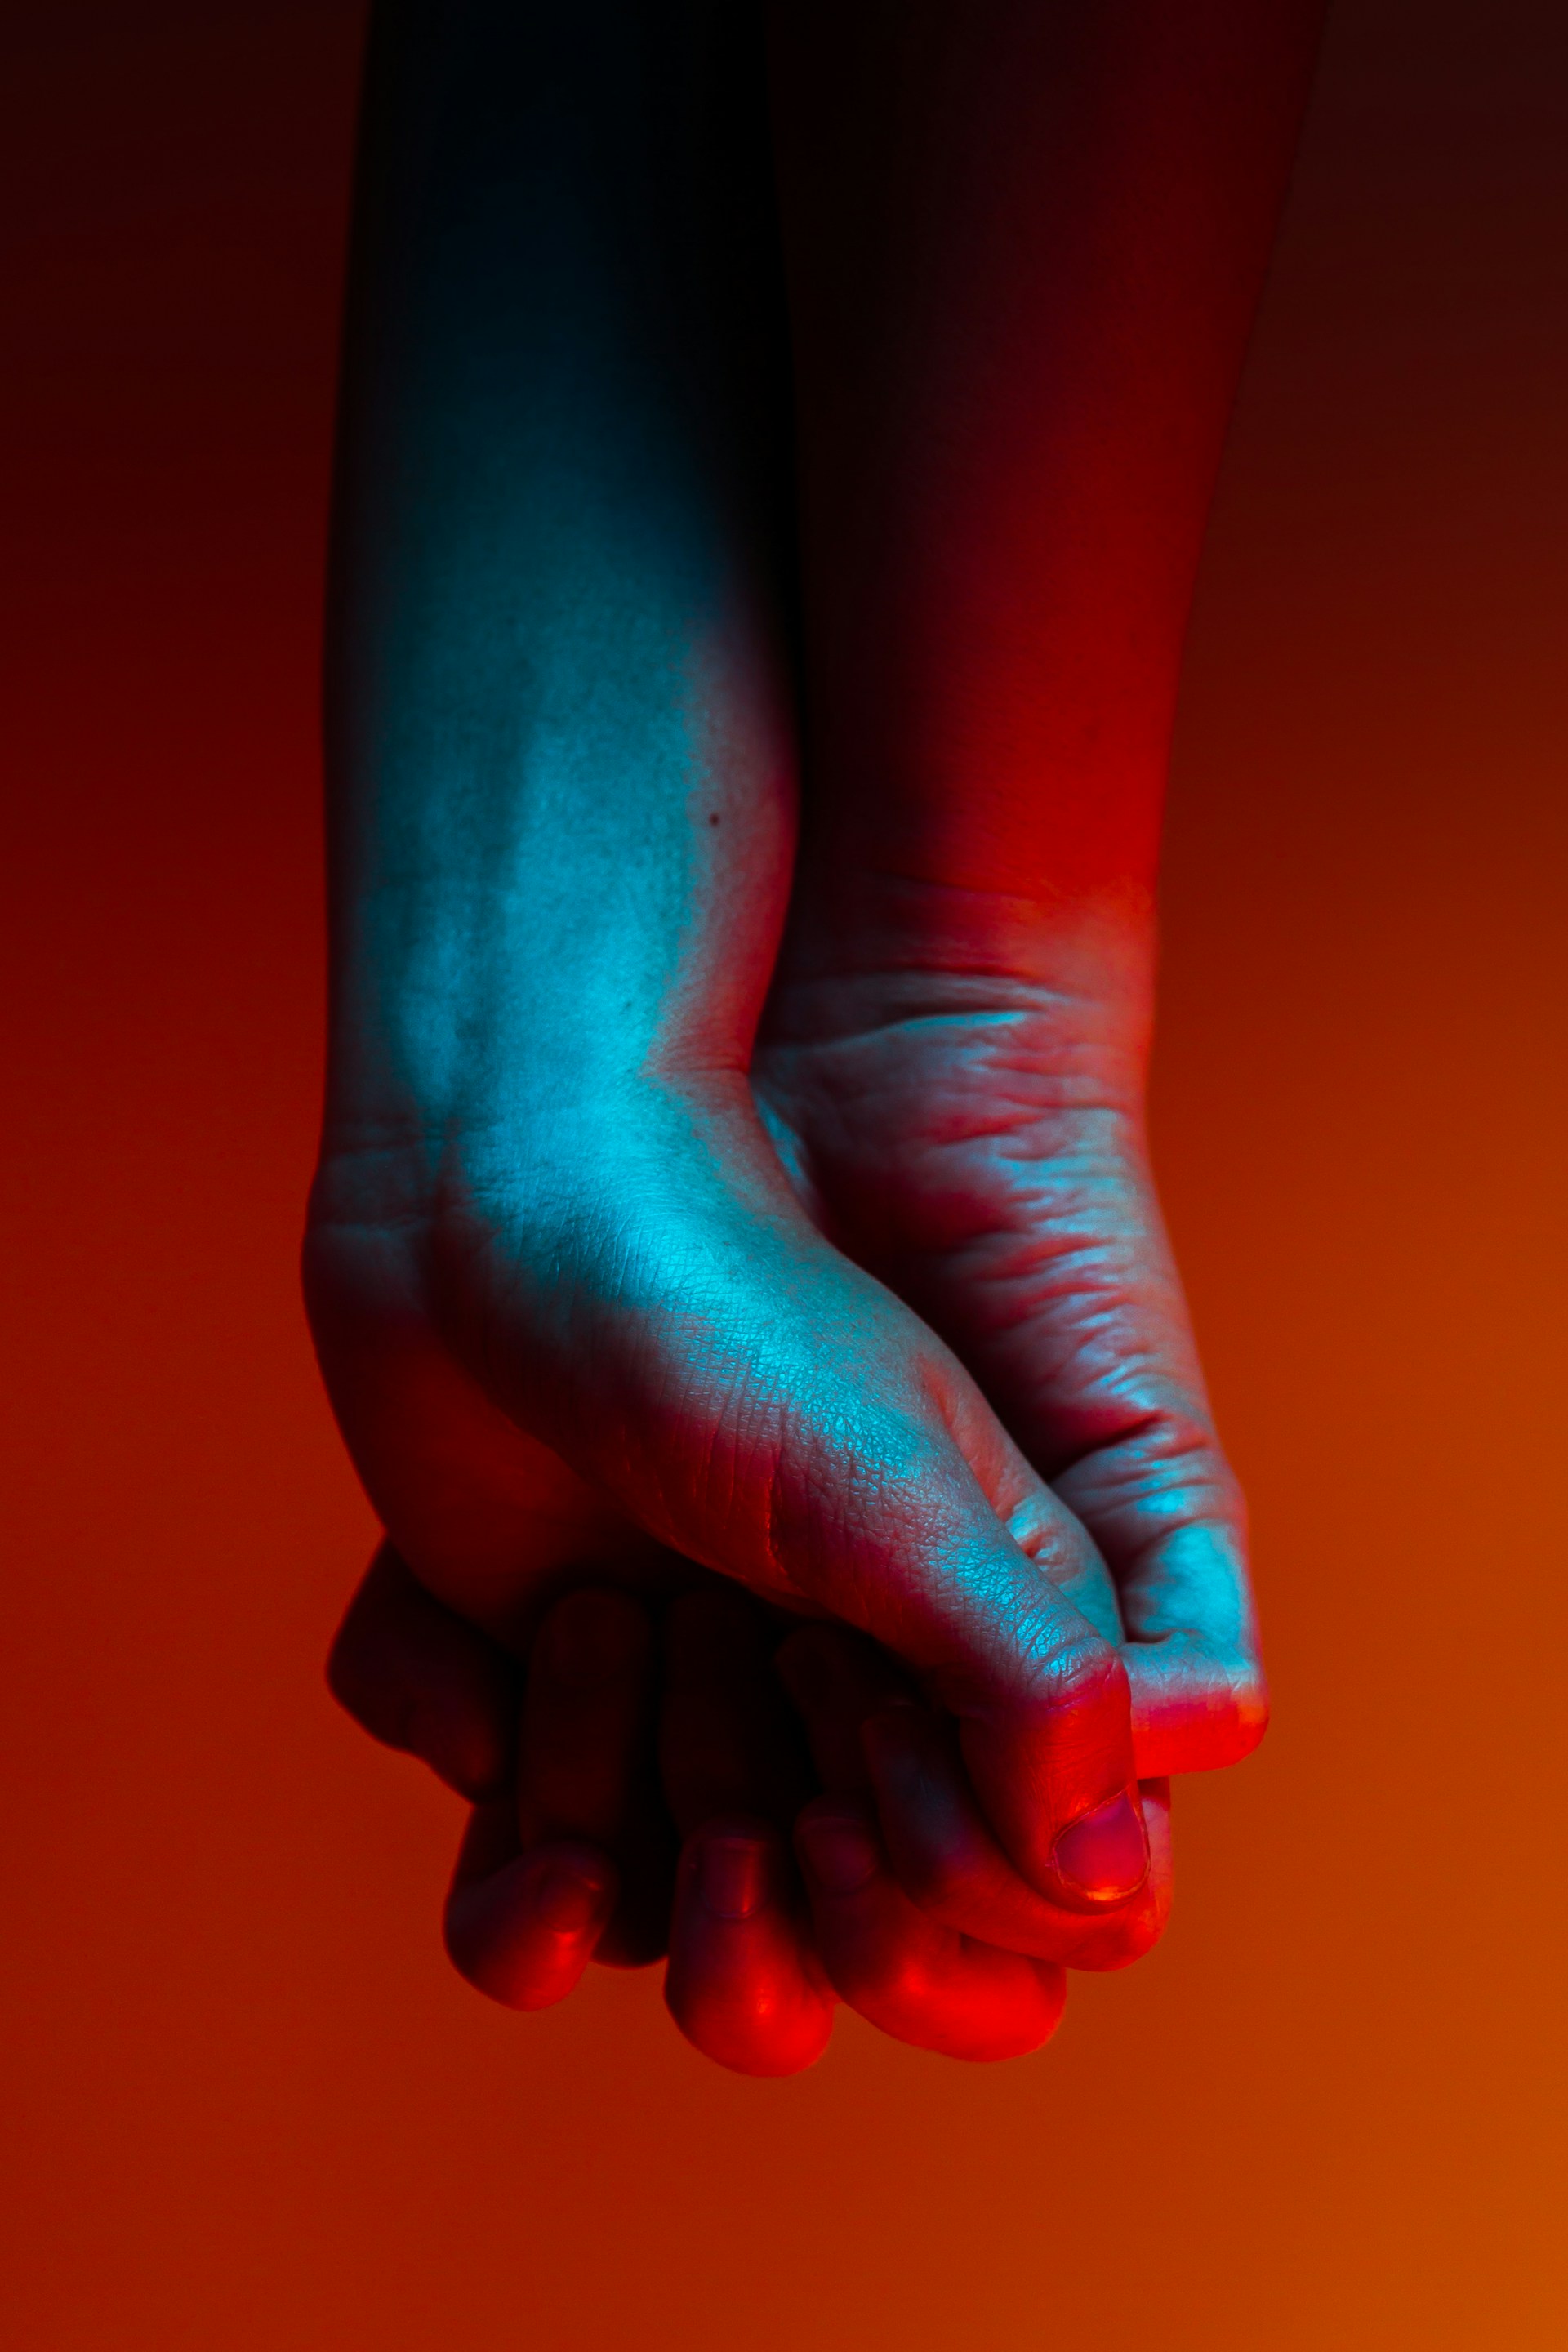 A couple holding hands | Source: Unsplash